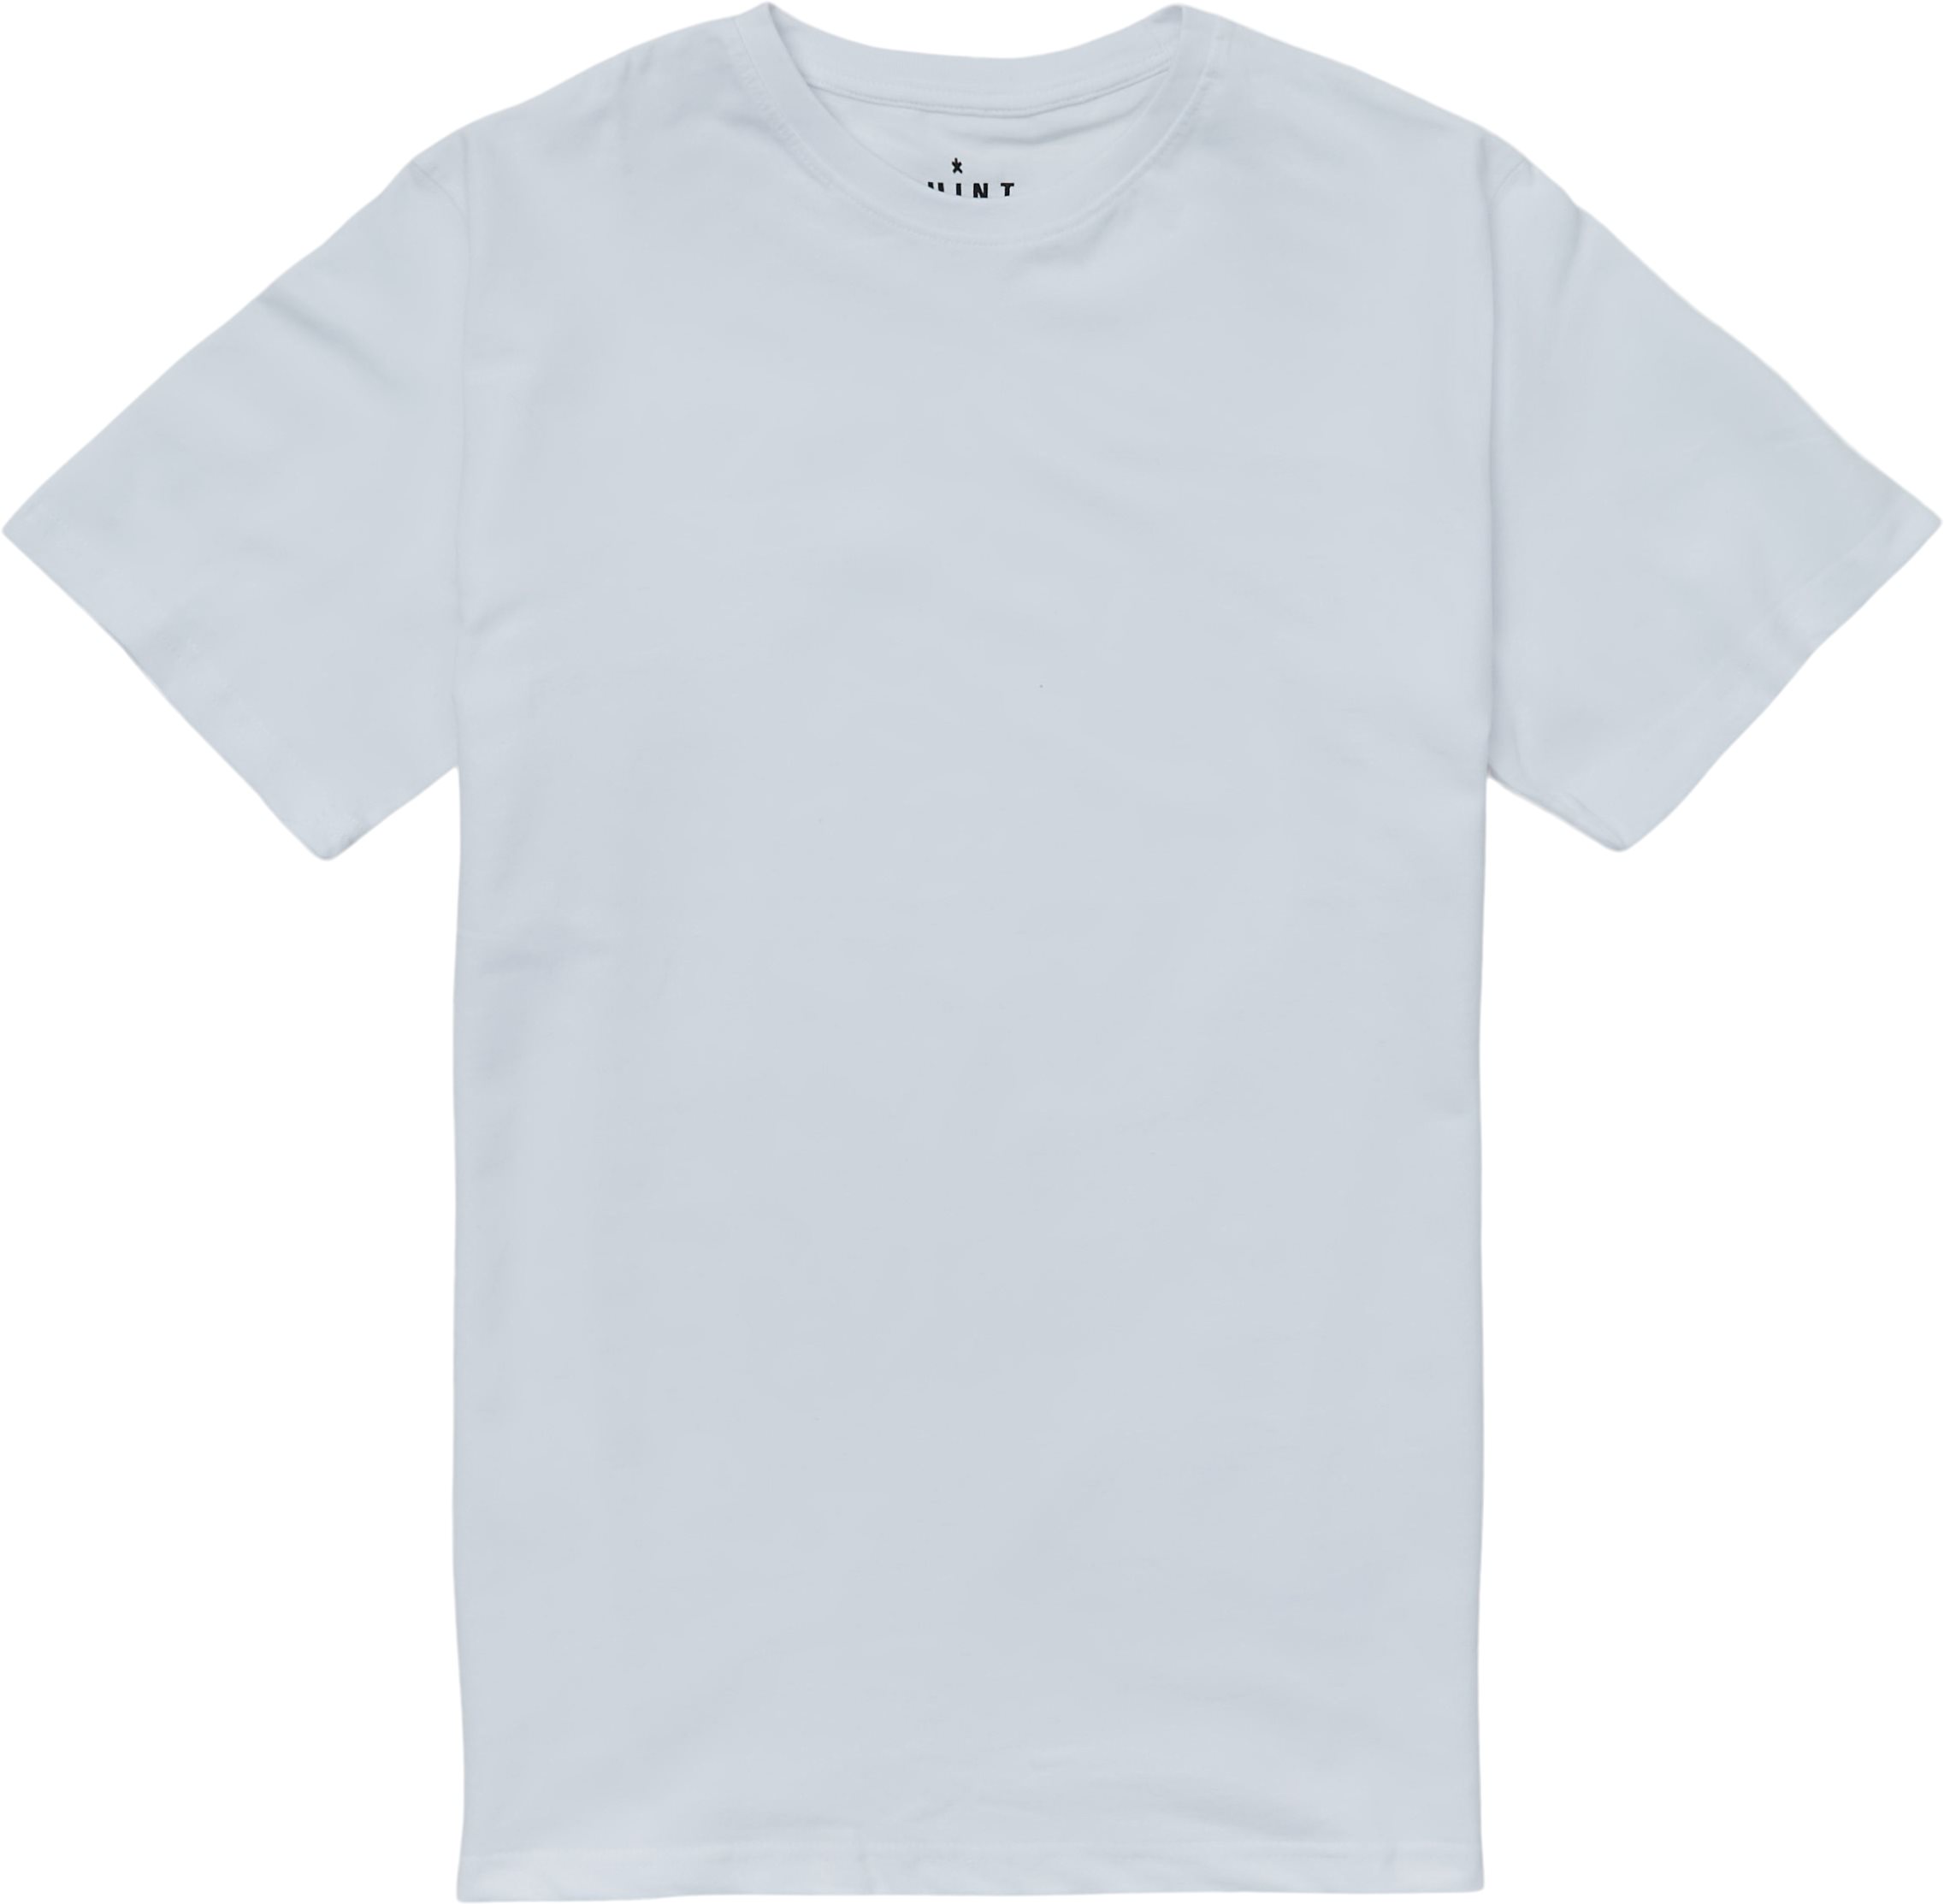 Brandon Crew Neck Tee - T-shirts - Regular fit - White